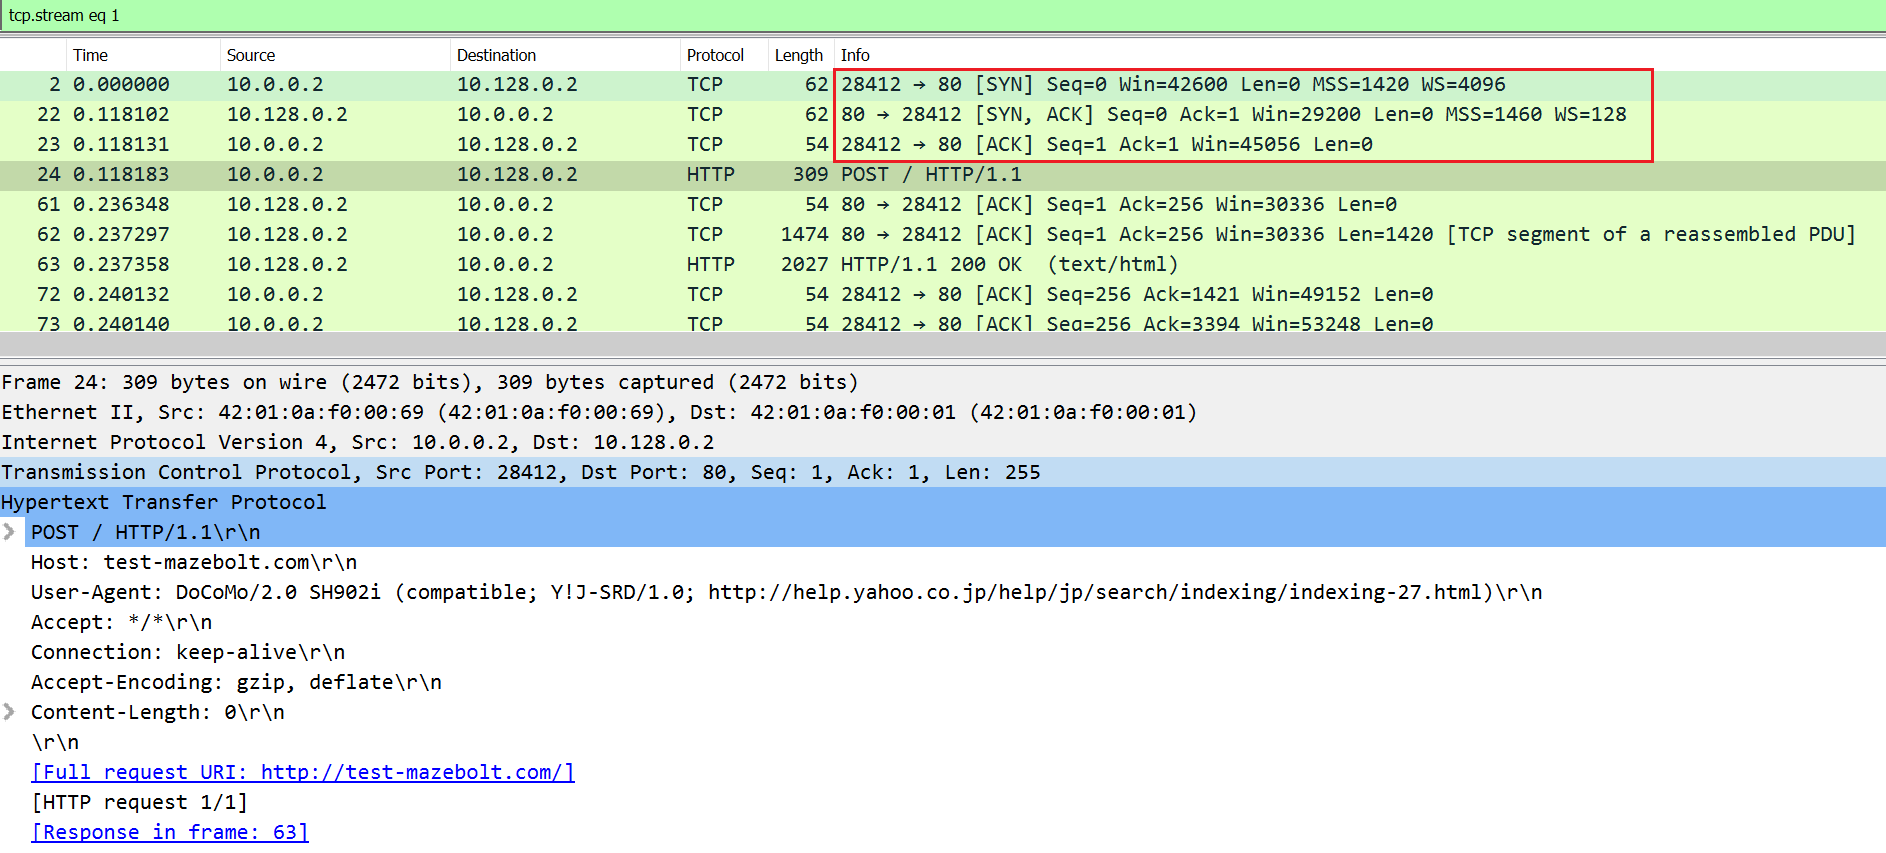 wireshark filters showing apt1 attacks